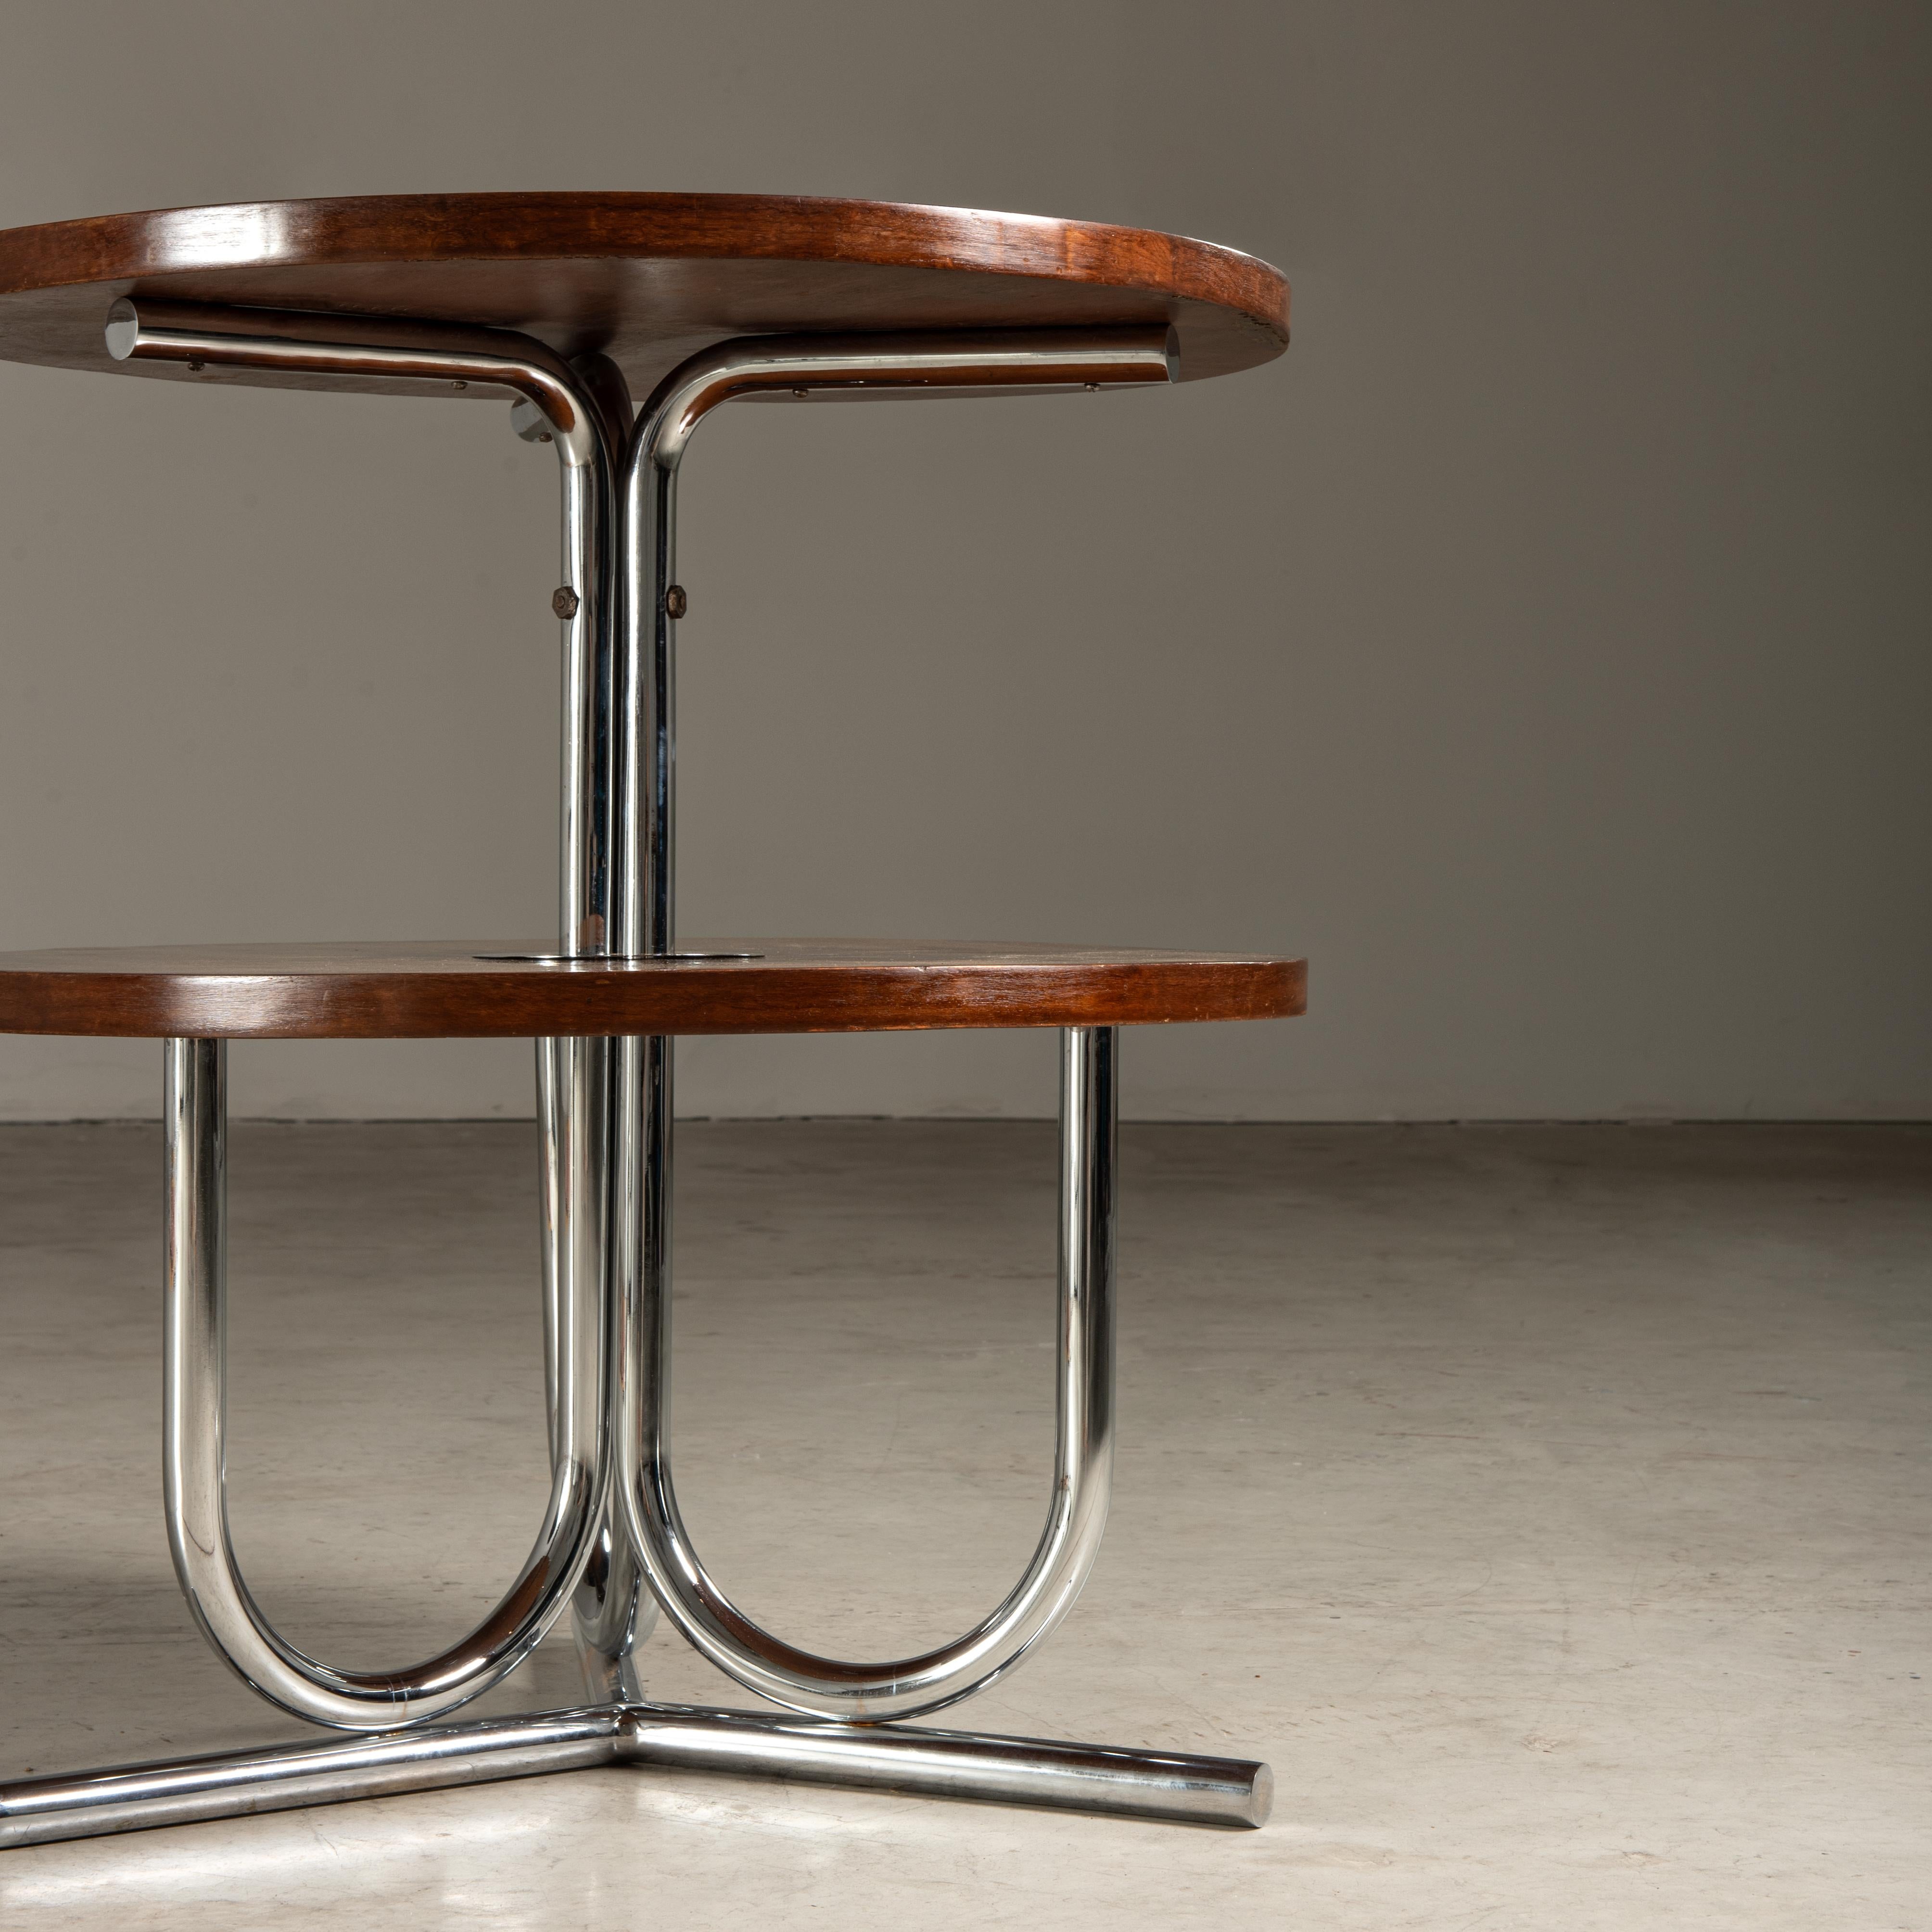 20th Century Art Deco Side Table In Tubular Metal and Wood, by John Graz, Brazilian Modern For Sale